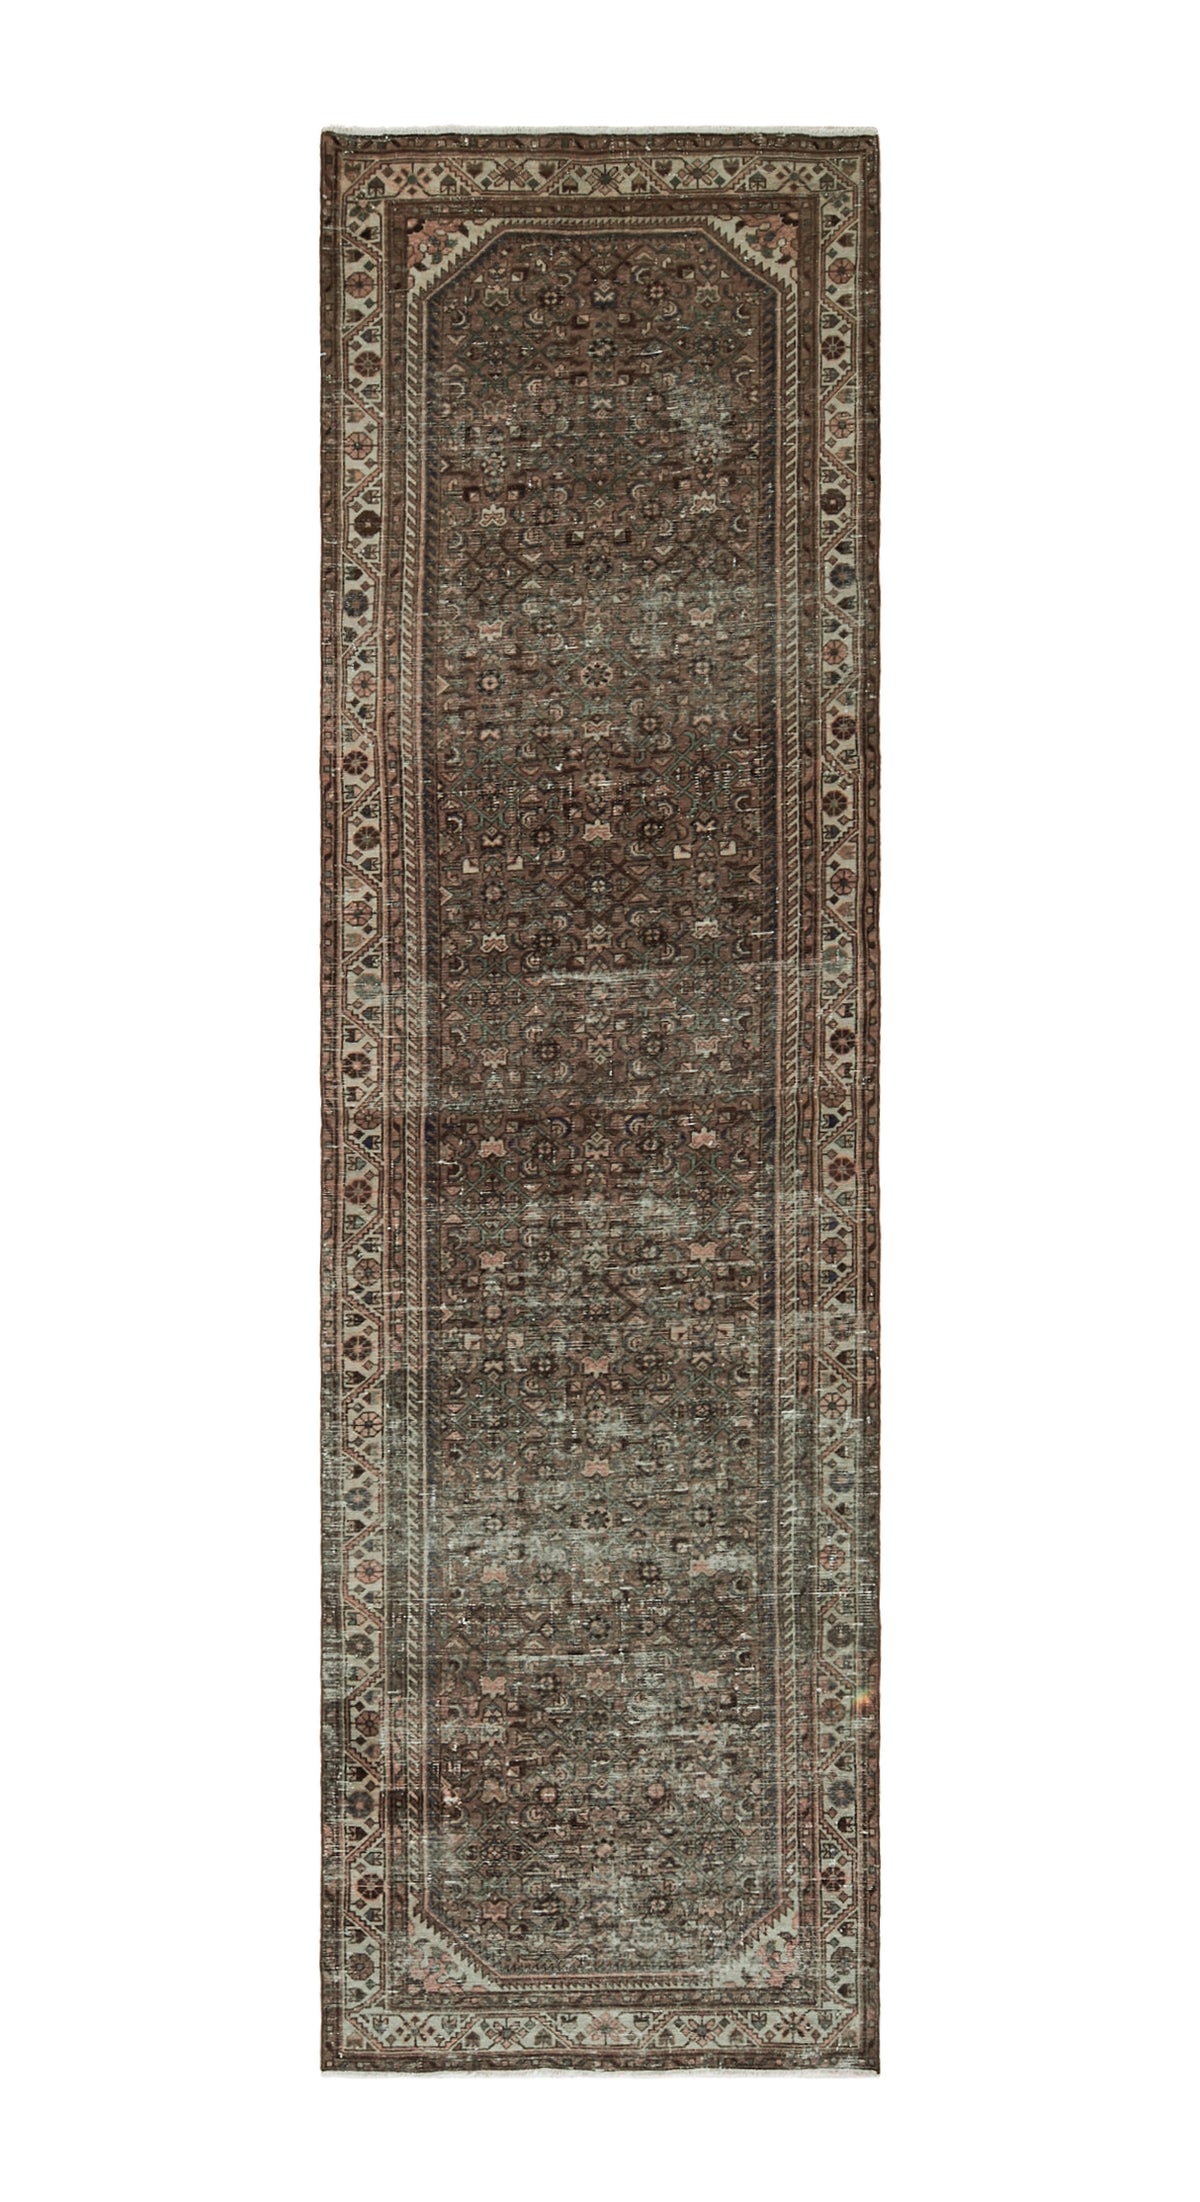 Allisyn - Vintage Persian Runner Rug